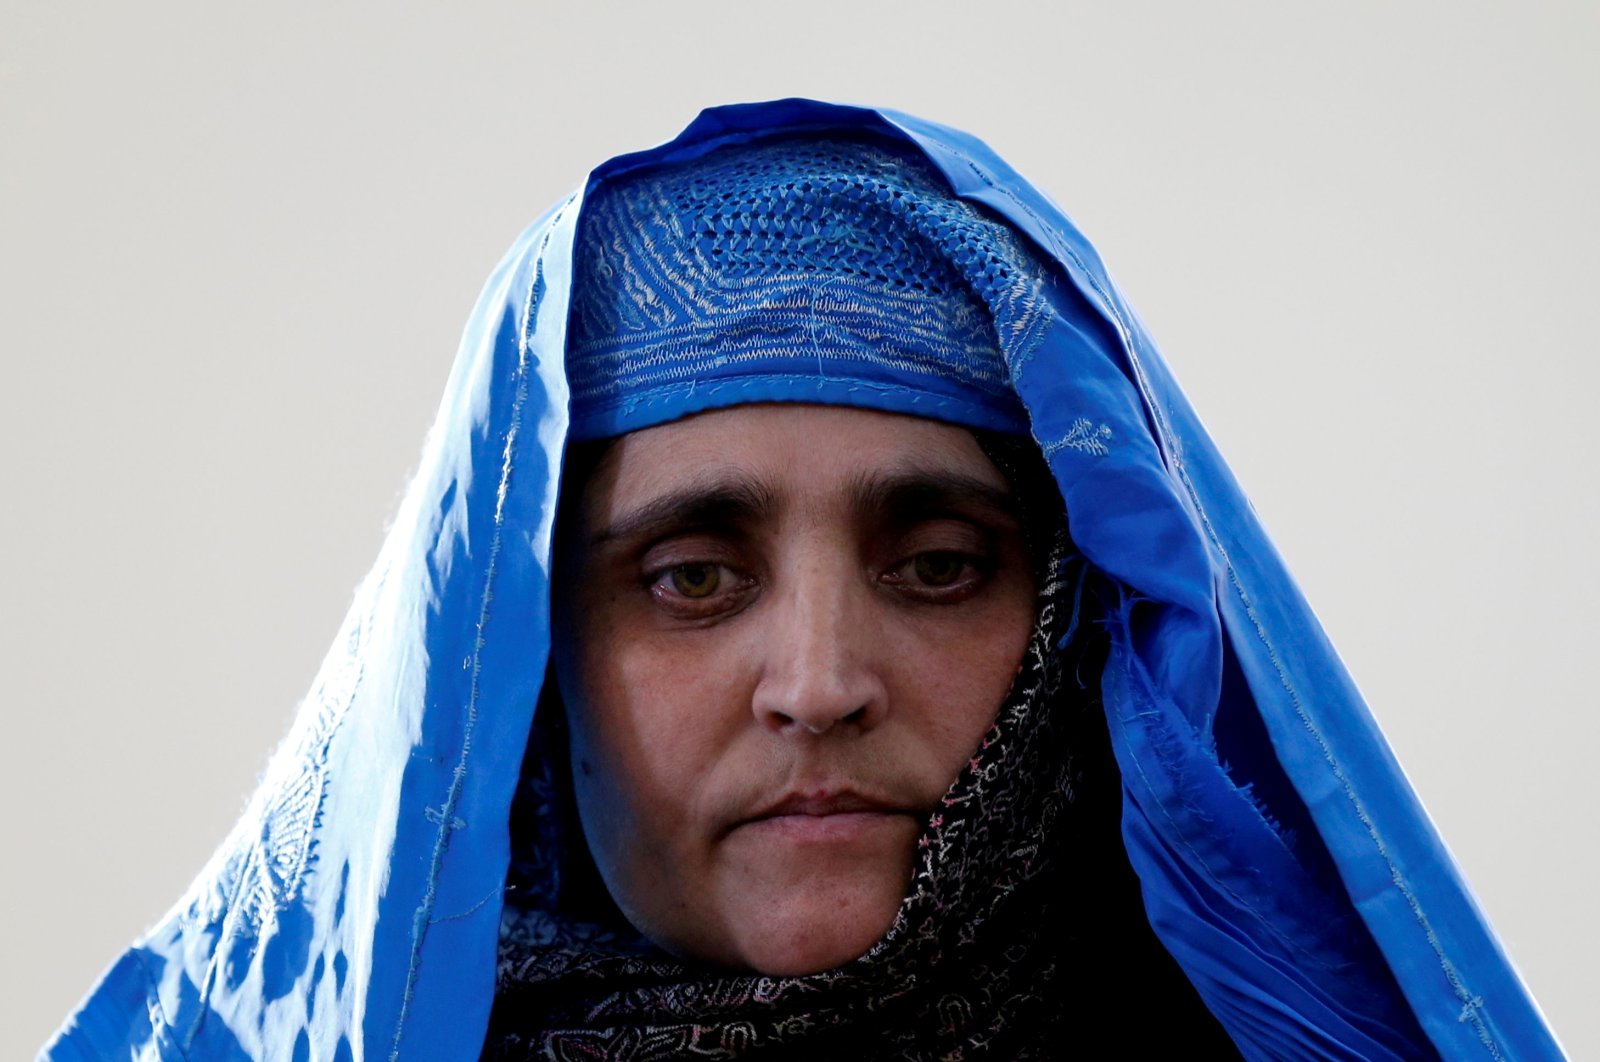 Sharbat Gula ‘Gadis Afghanistan’ bermata hijau diberikan suaka di Italia